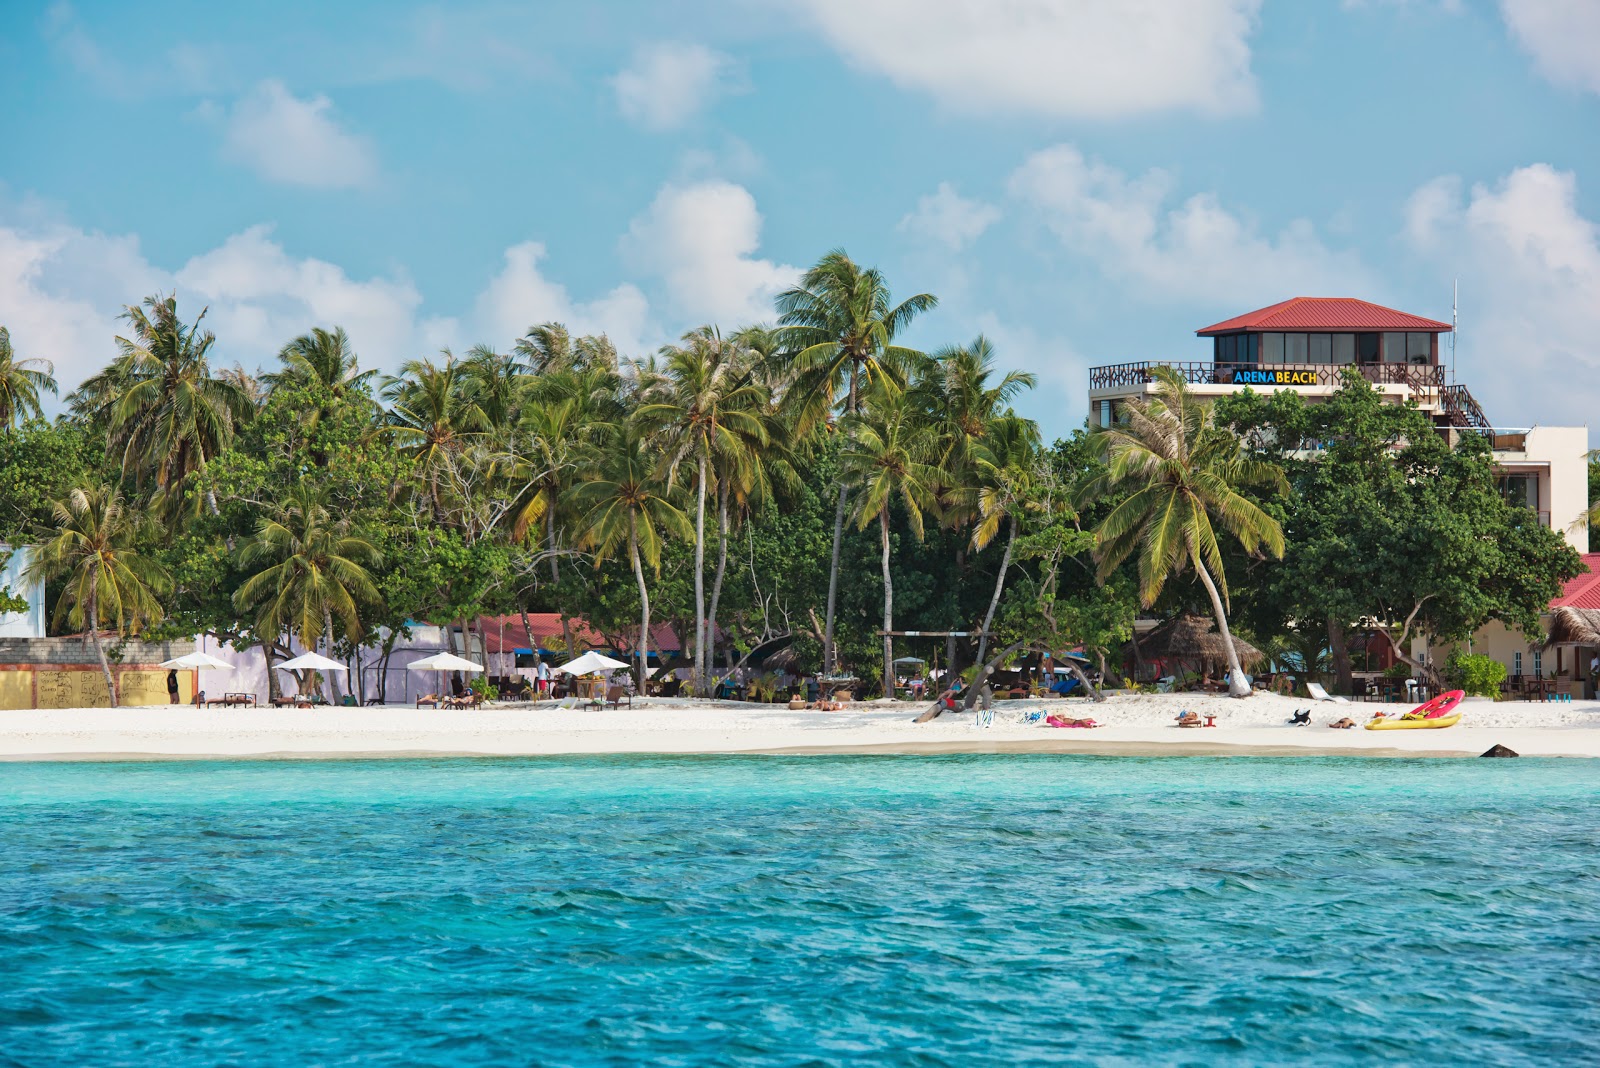 Foto af Maafushi Beach delvist hotelområde